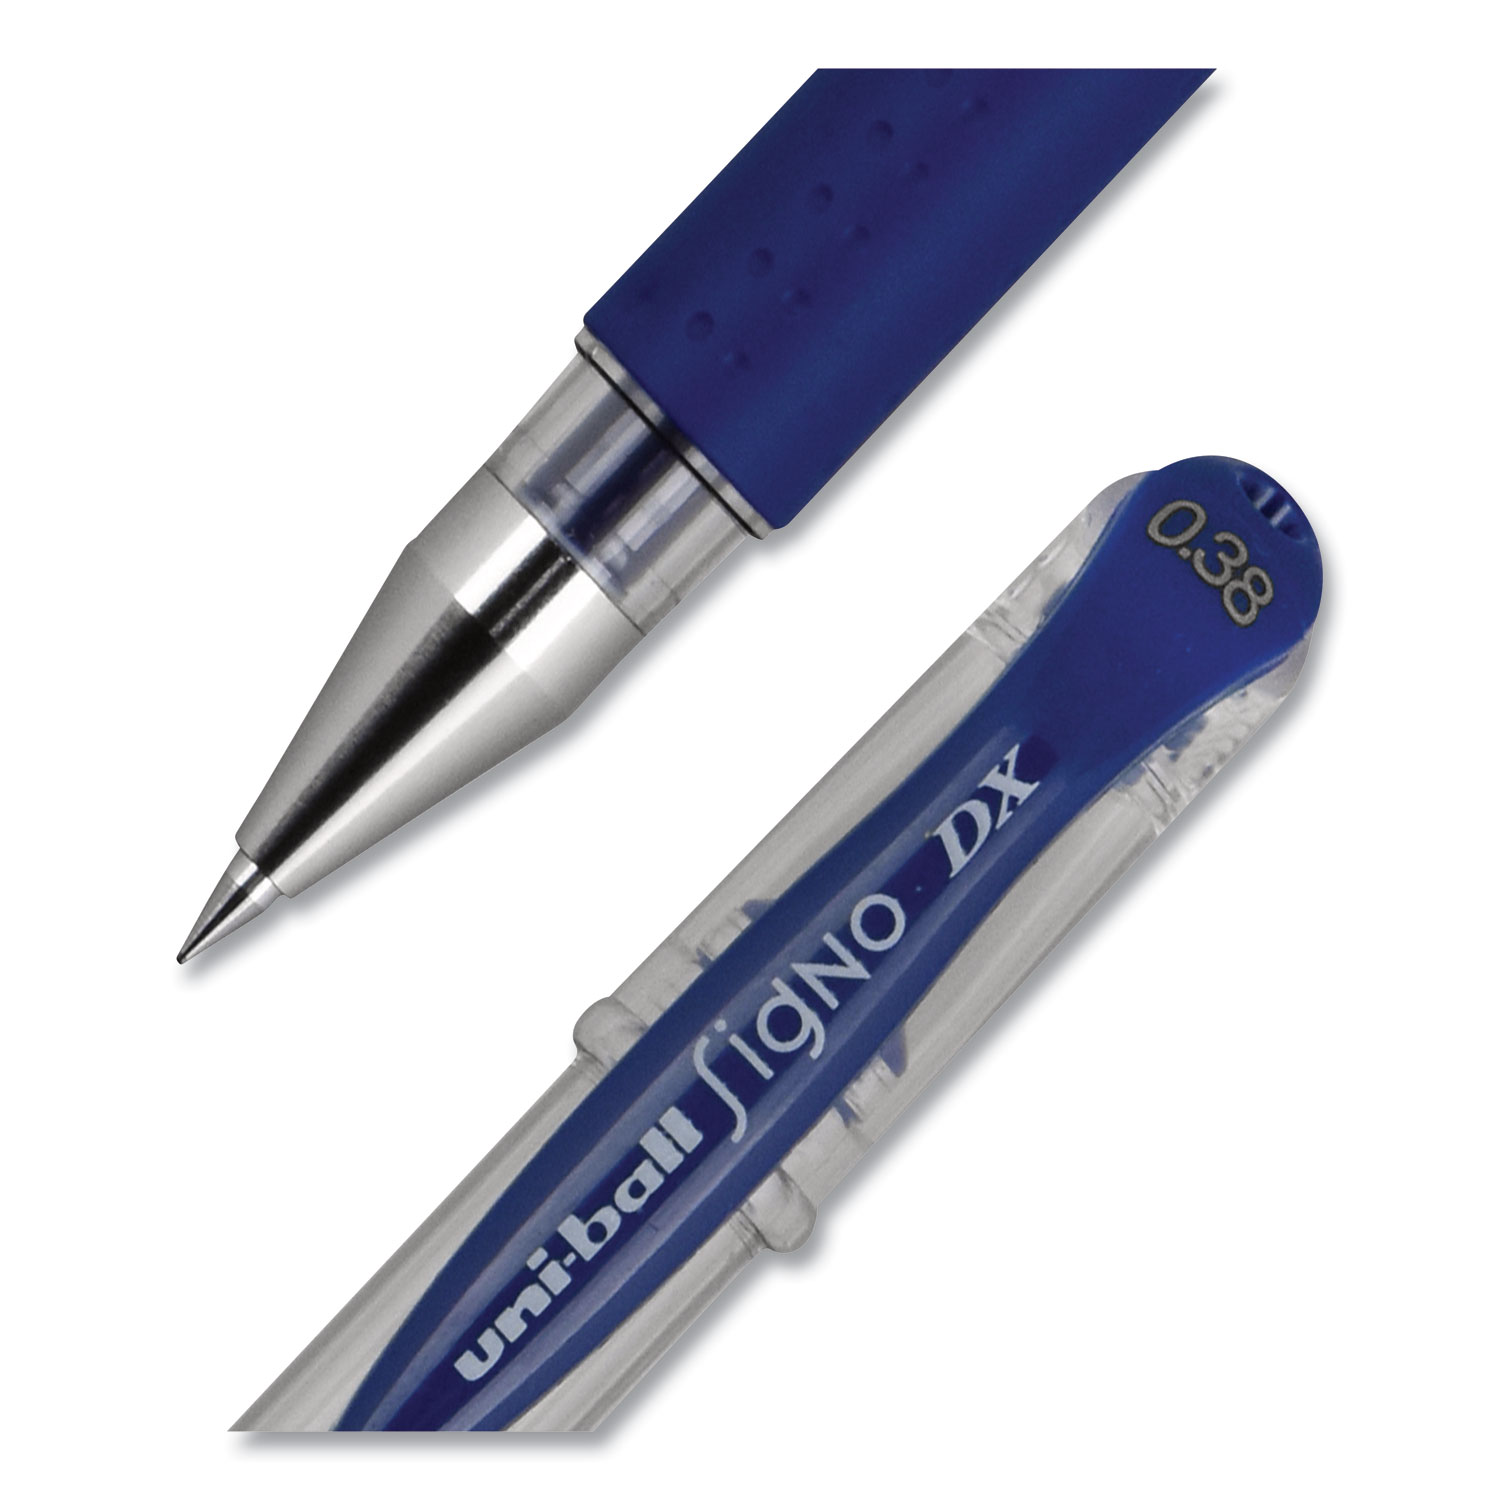 emott Porous Point Pens, Fine 0.4 mm, Assorted Ink, 5/Pack, Uni-Ball (Ubc24828)